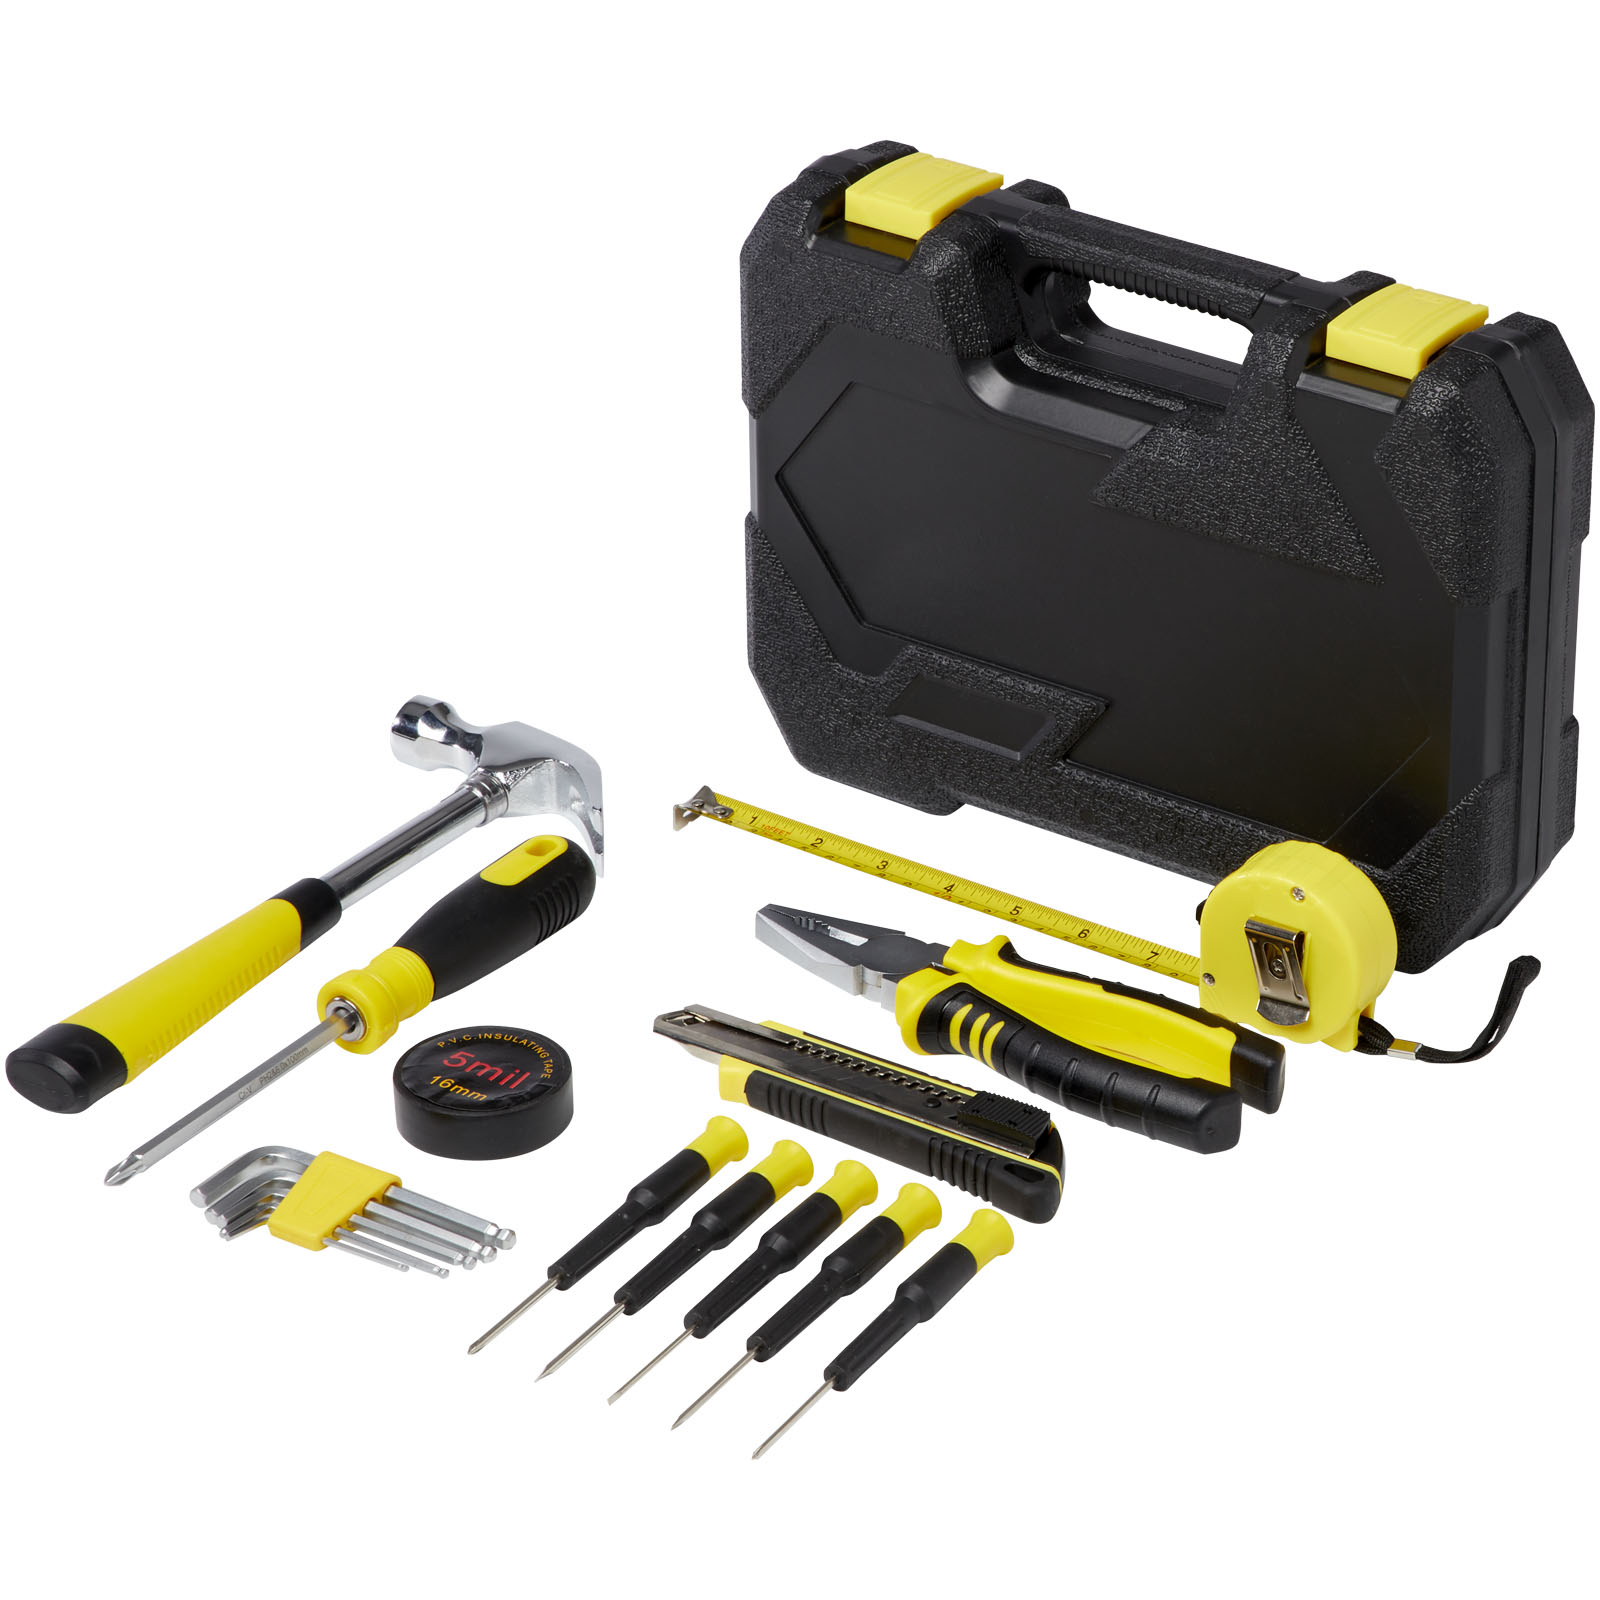 Tools & Car Accessories - Sounion 16-piece tool box